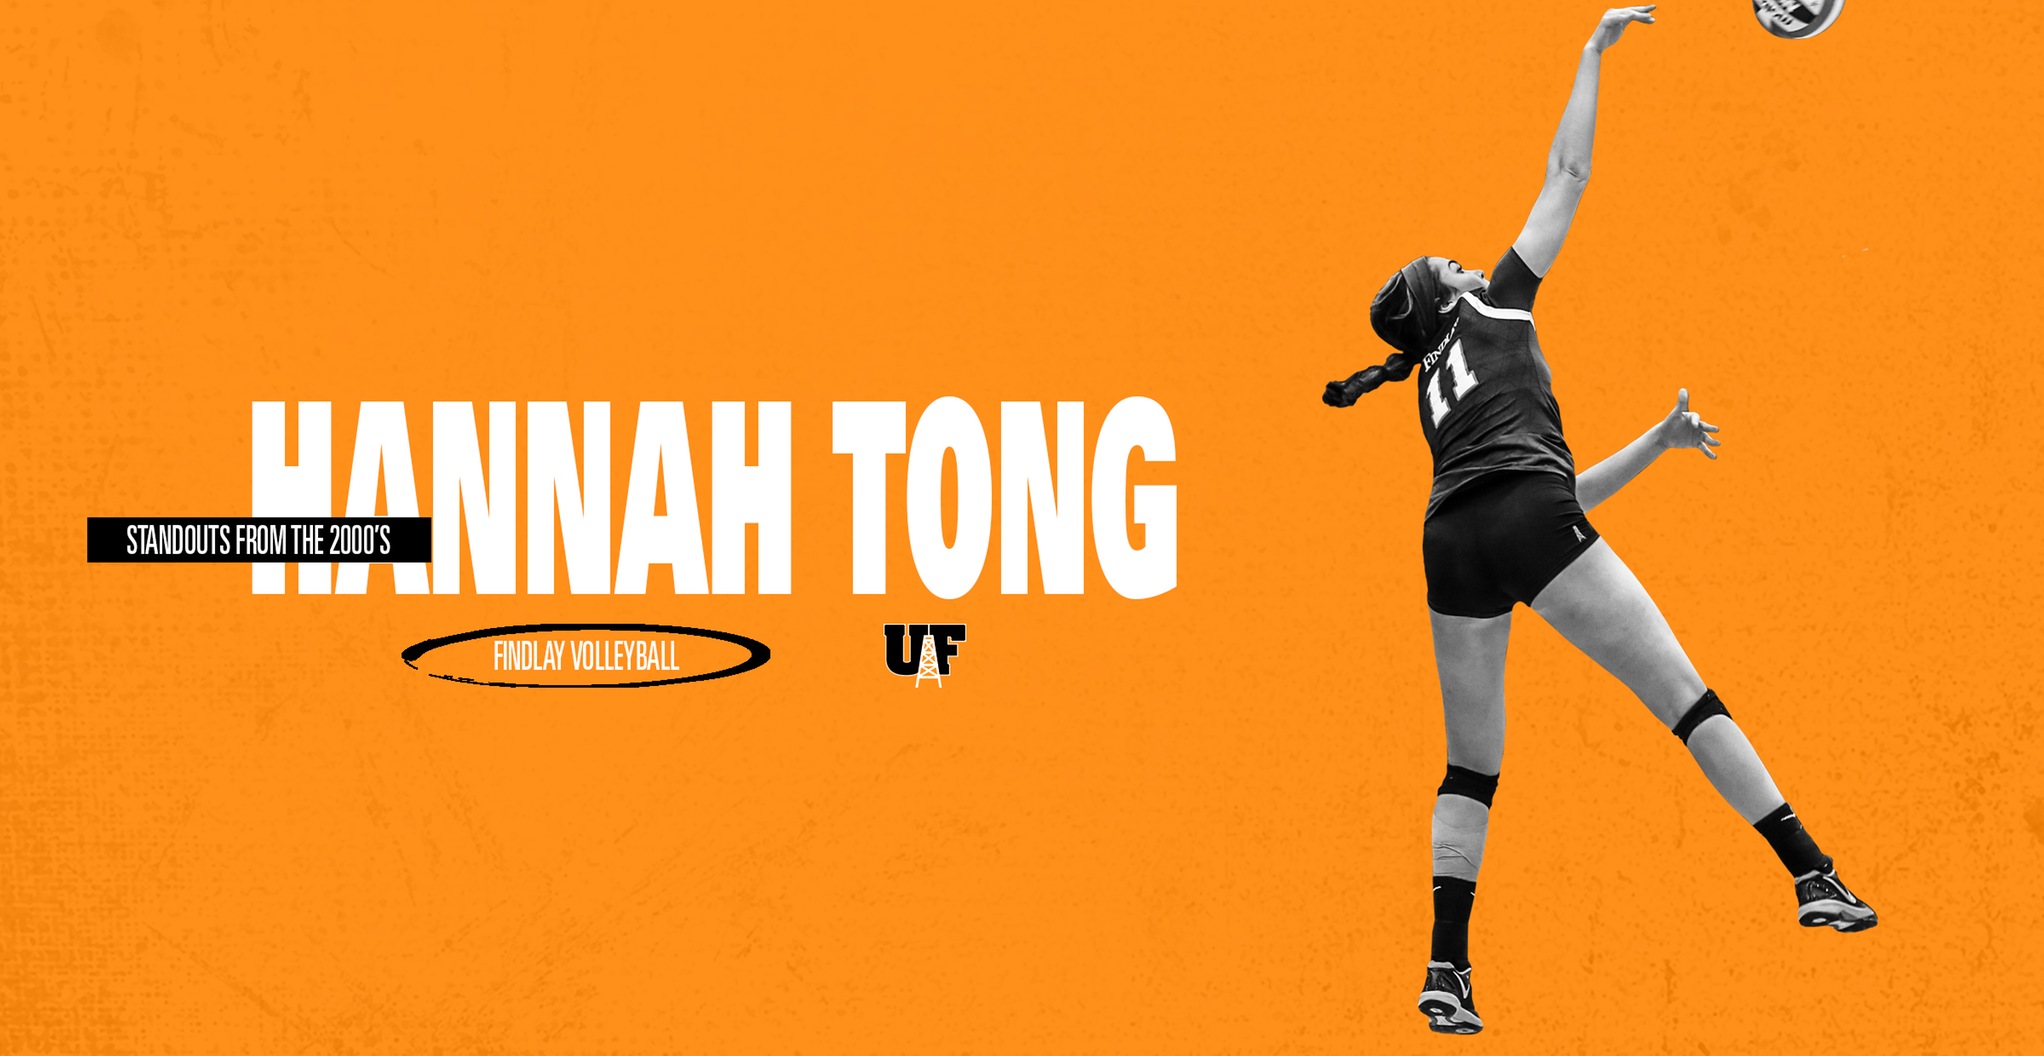 Hannah Tong, women's volleyball player